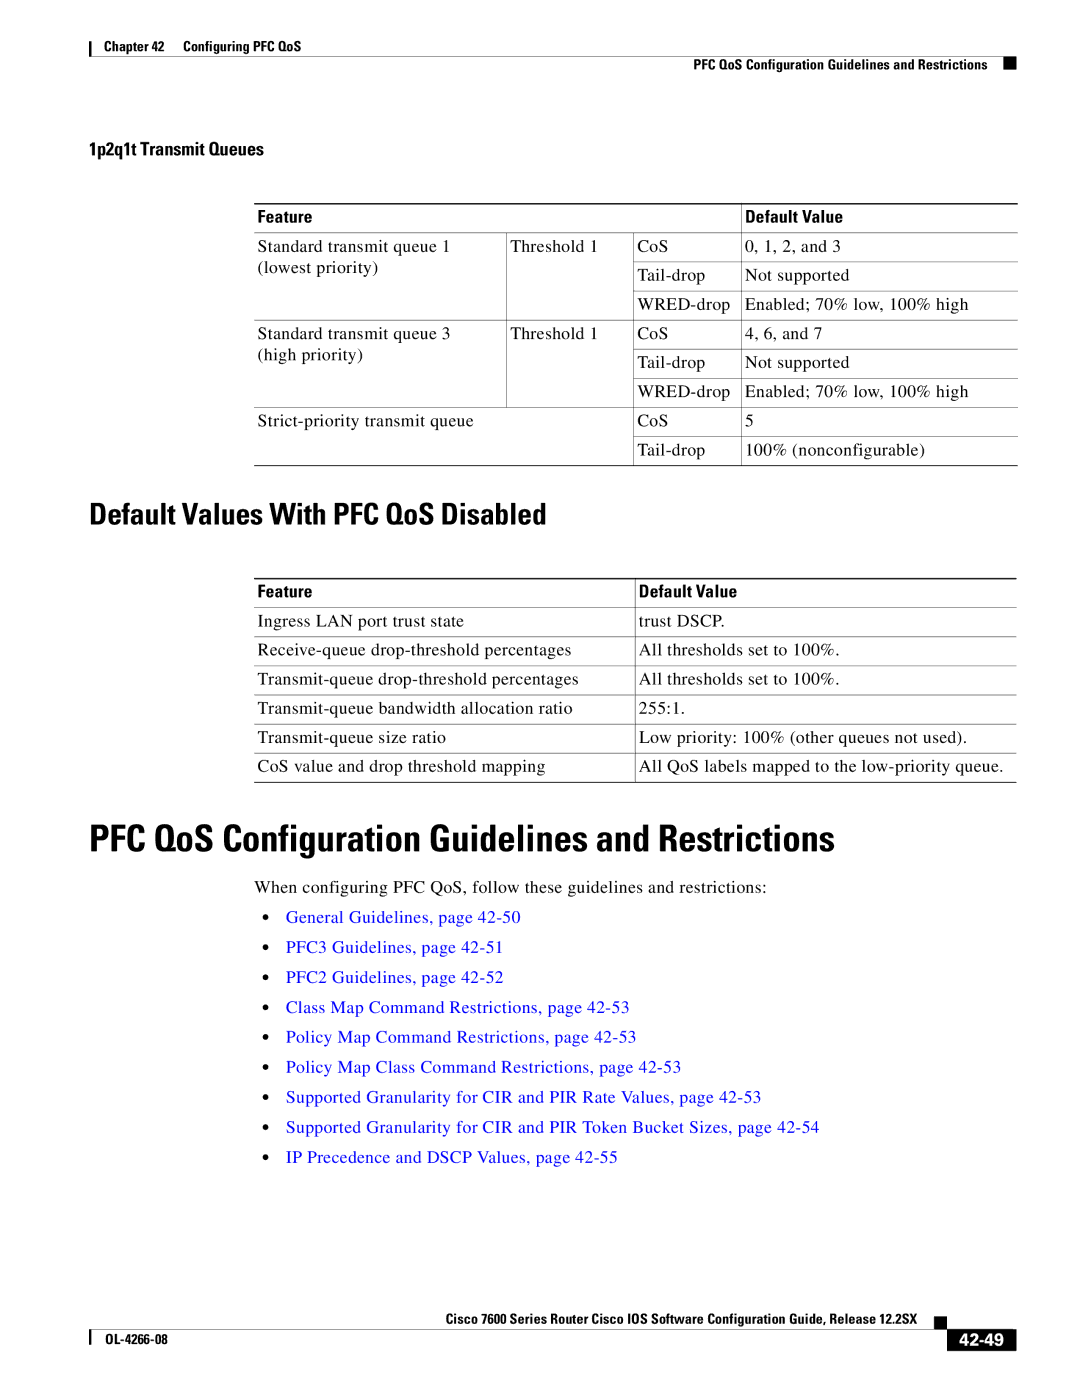 Cisco Systems OL-4266-08 manual Default Values With PFC QoS Disabled, 1p2q1t Transmit Queues, 42-49 